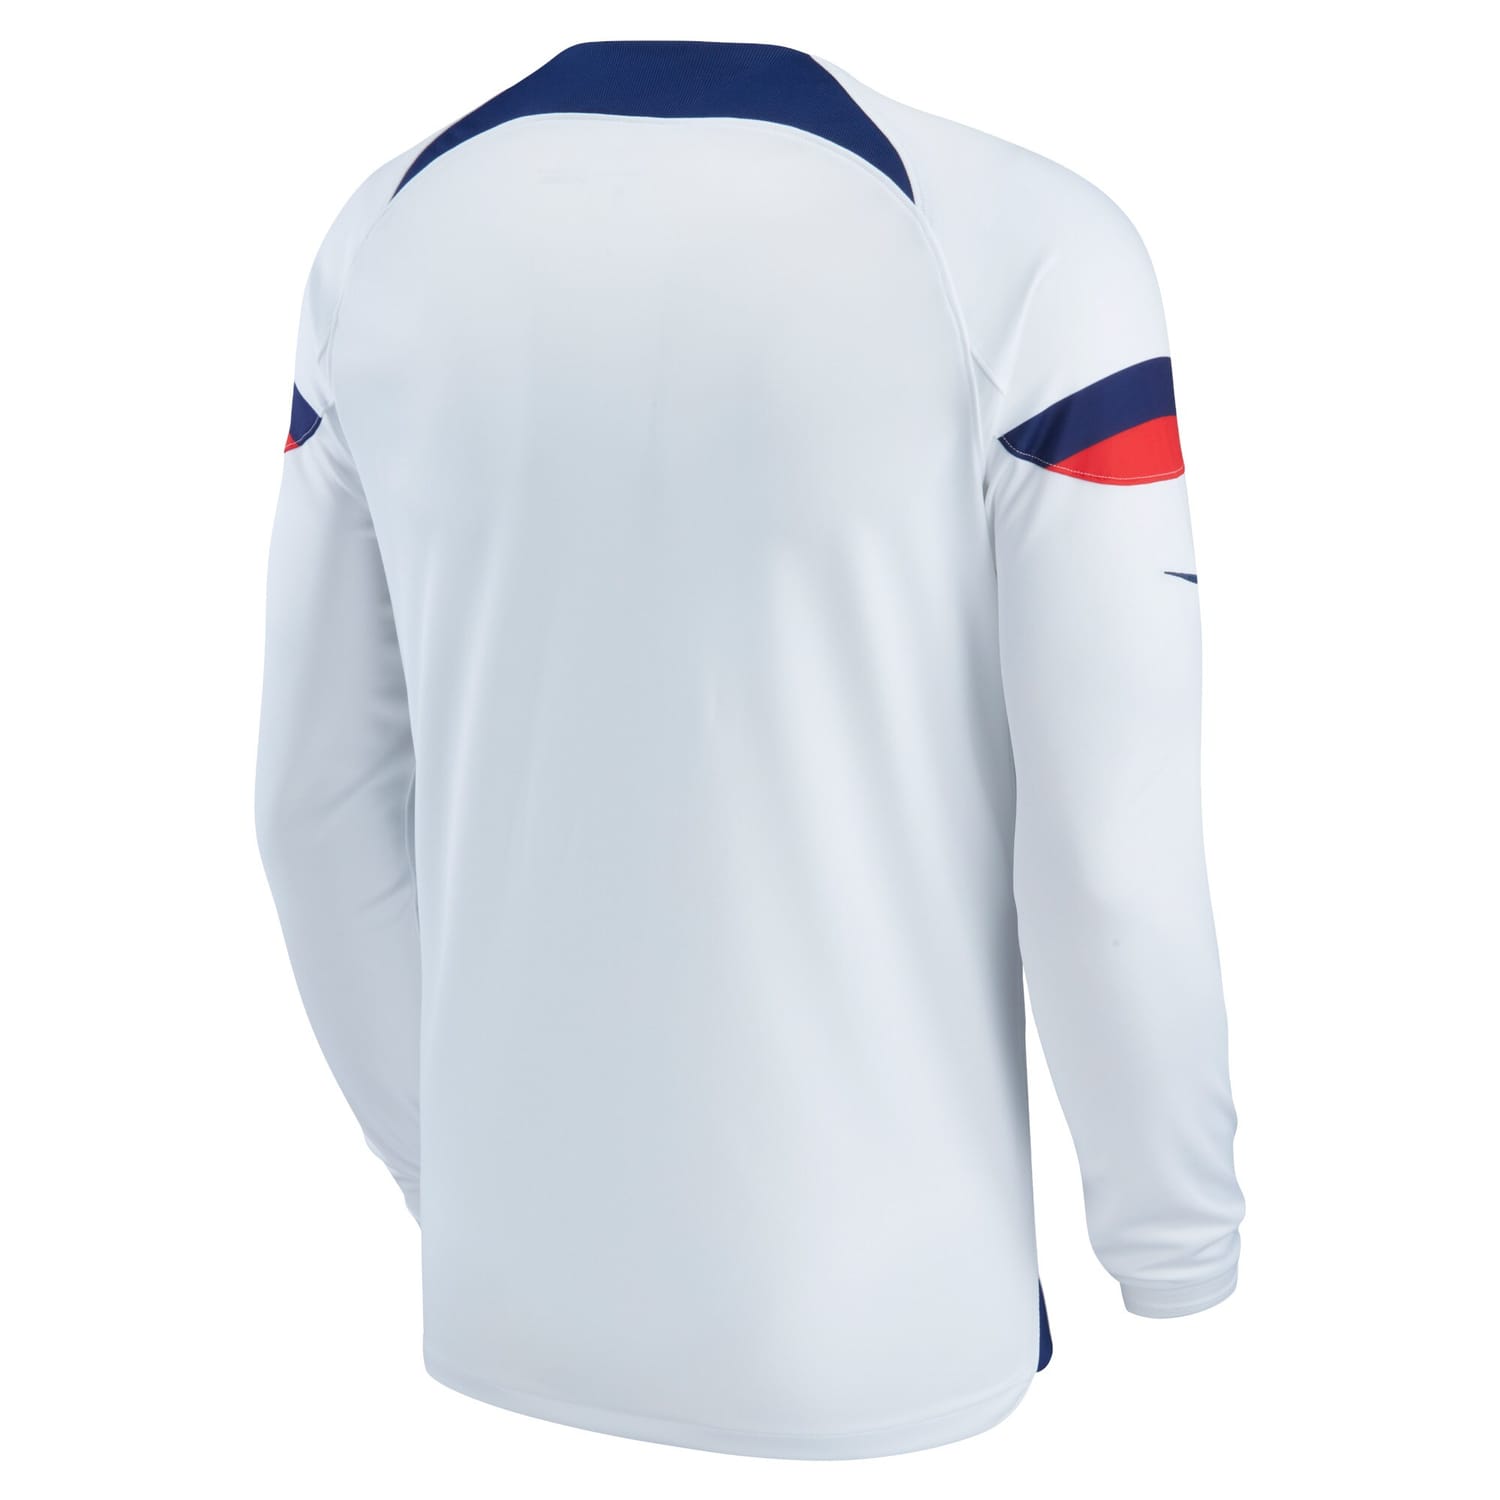 USMNT Home Jersey Shirt Long Sleeve White 2022-23 for Men